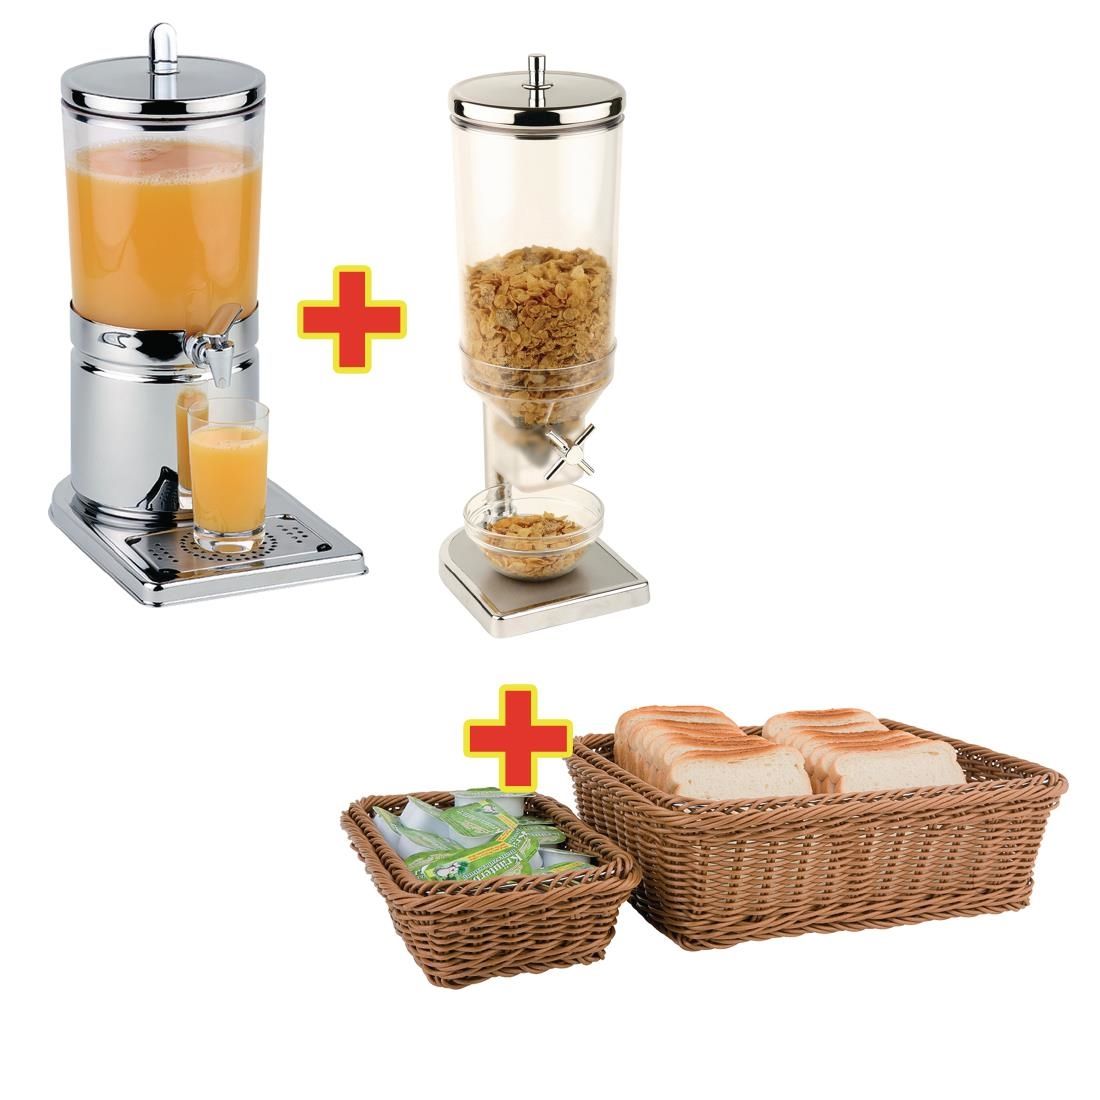 APS Breakfast Service Set with Cereal Dispenser, Juice Dispenser and Baskets JD Catering Equipment Solutions Ltd